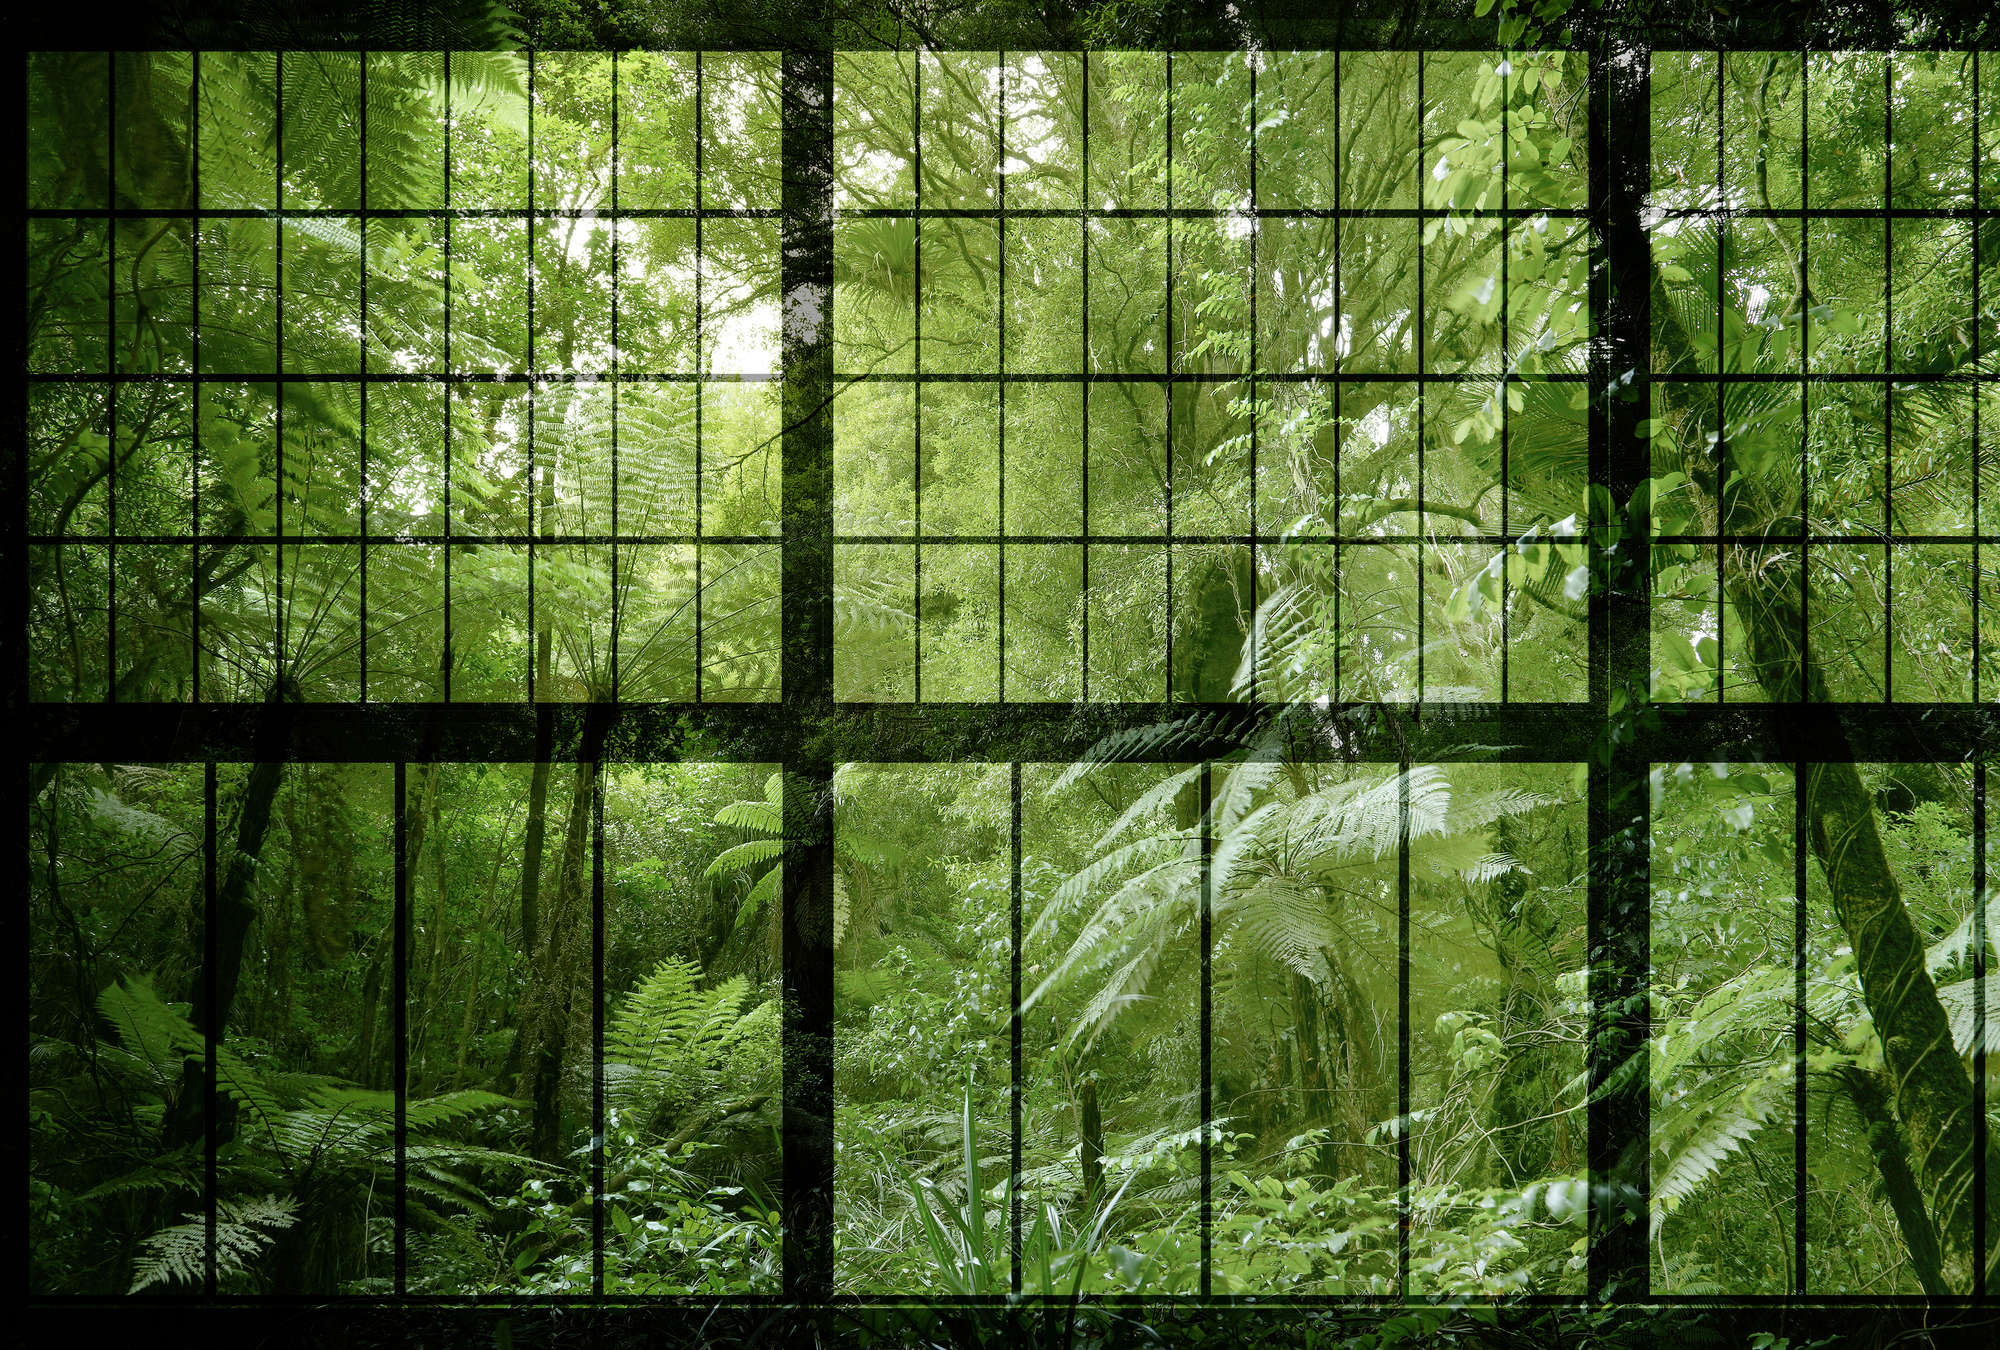             Rainforest 2 - Loft Window Wallpaper with Jungle View - Green, Black | Textured Non-woven
        